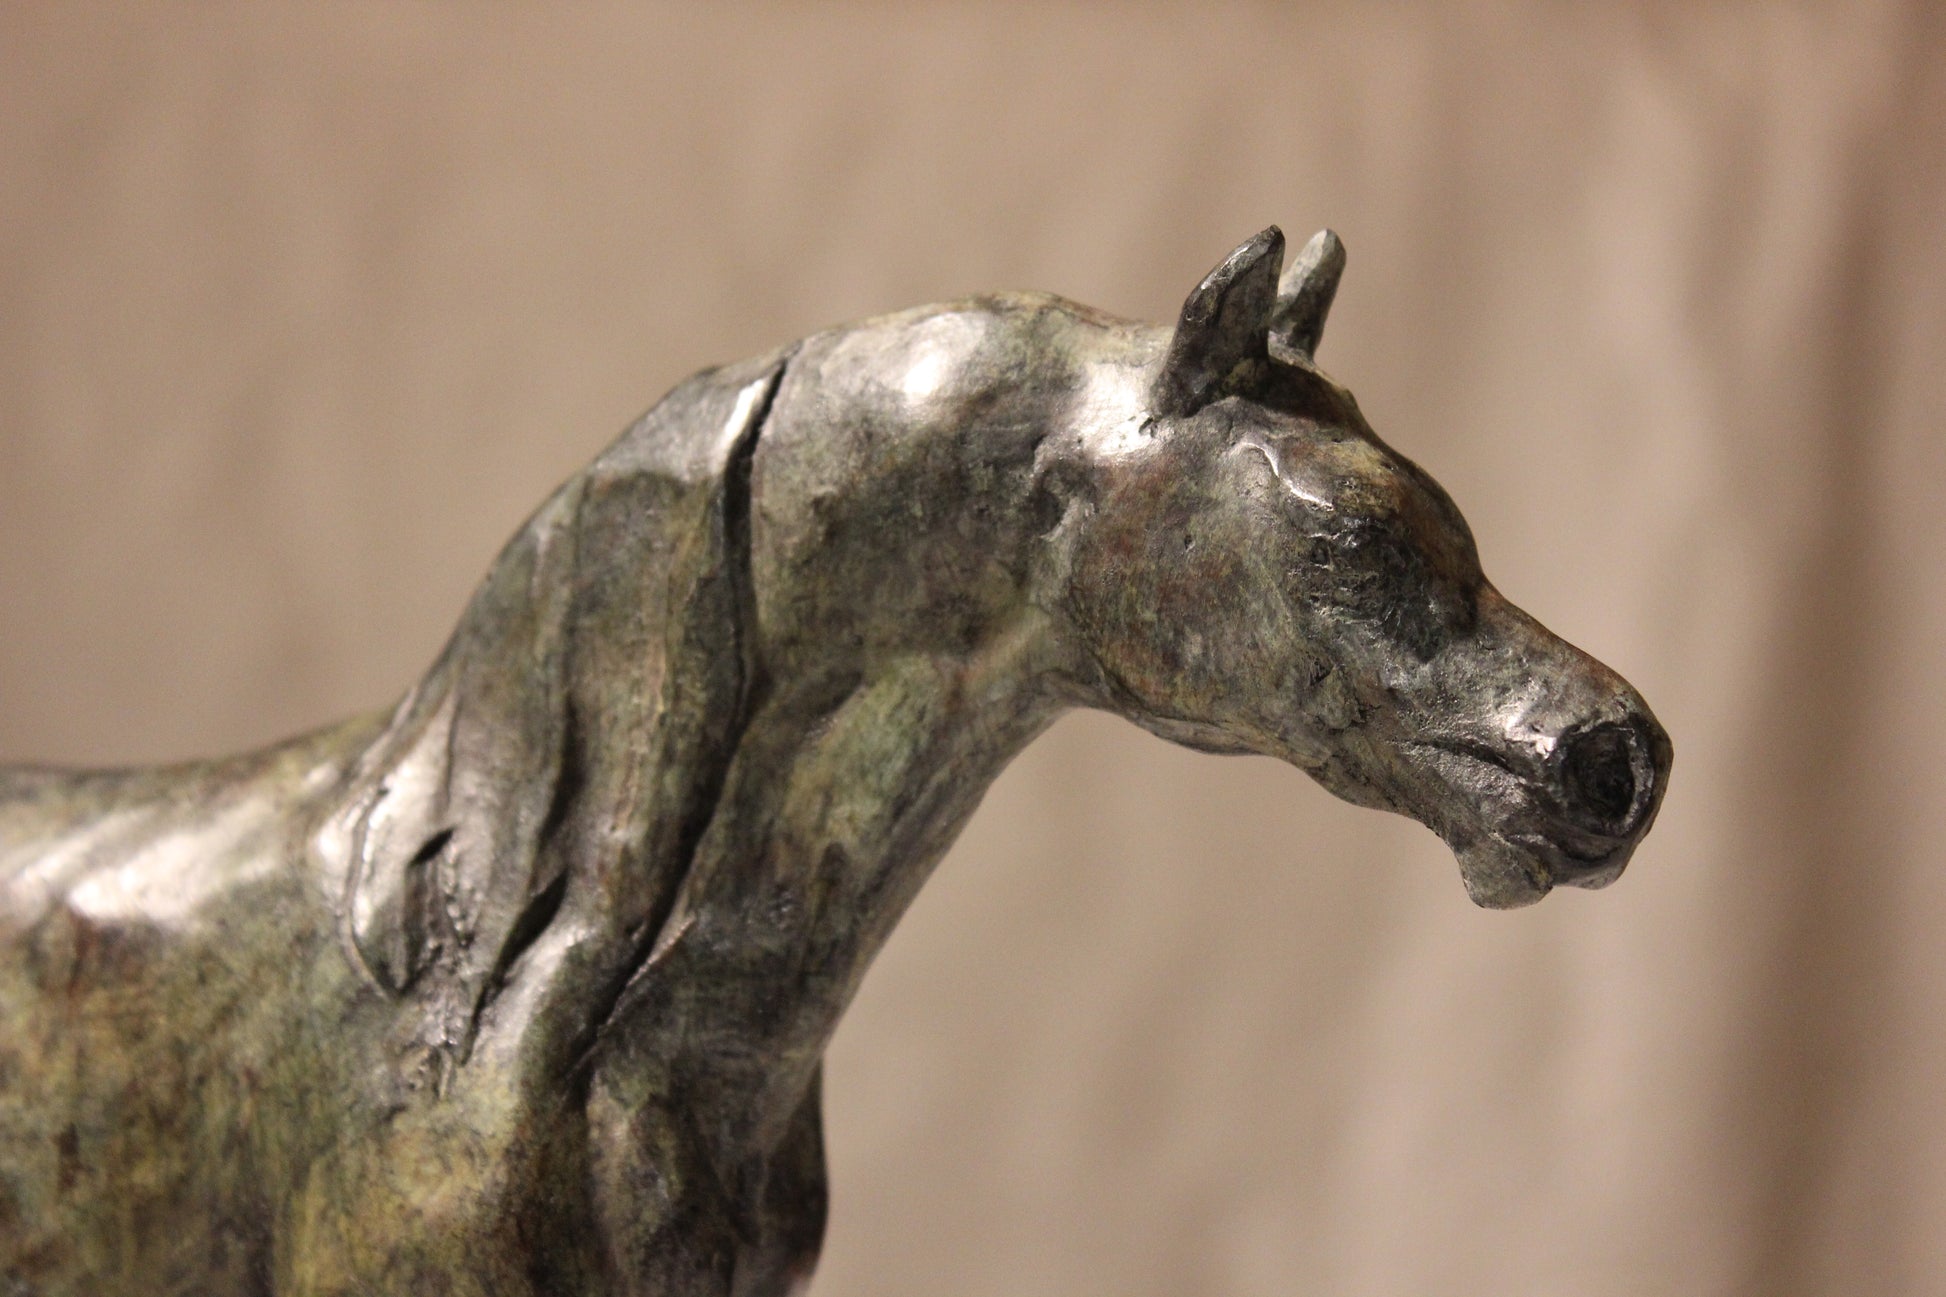 Sculpture cheval arabe, arabian horse sculpture, Audrey Flechet